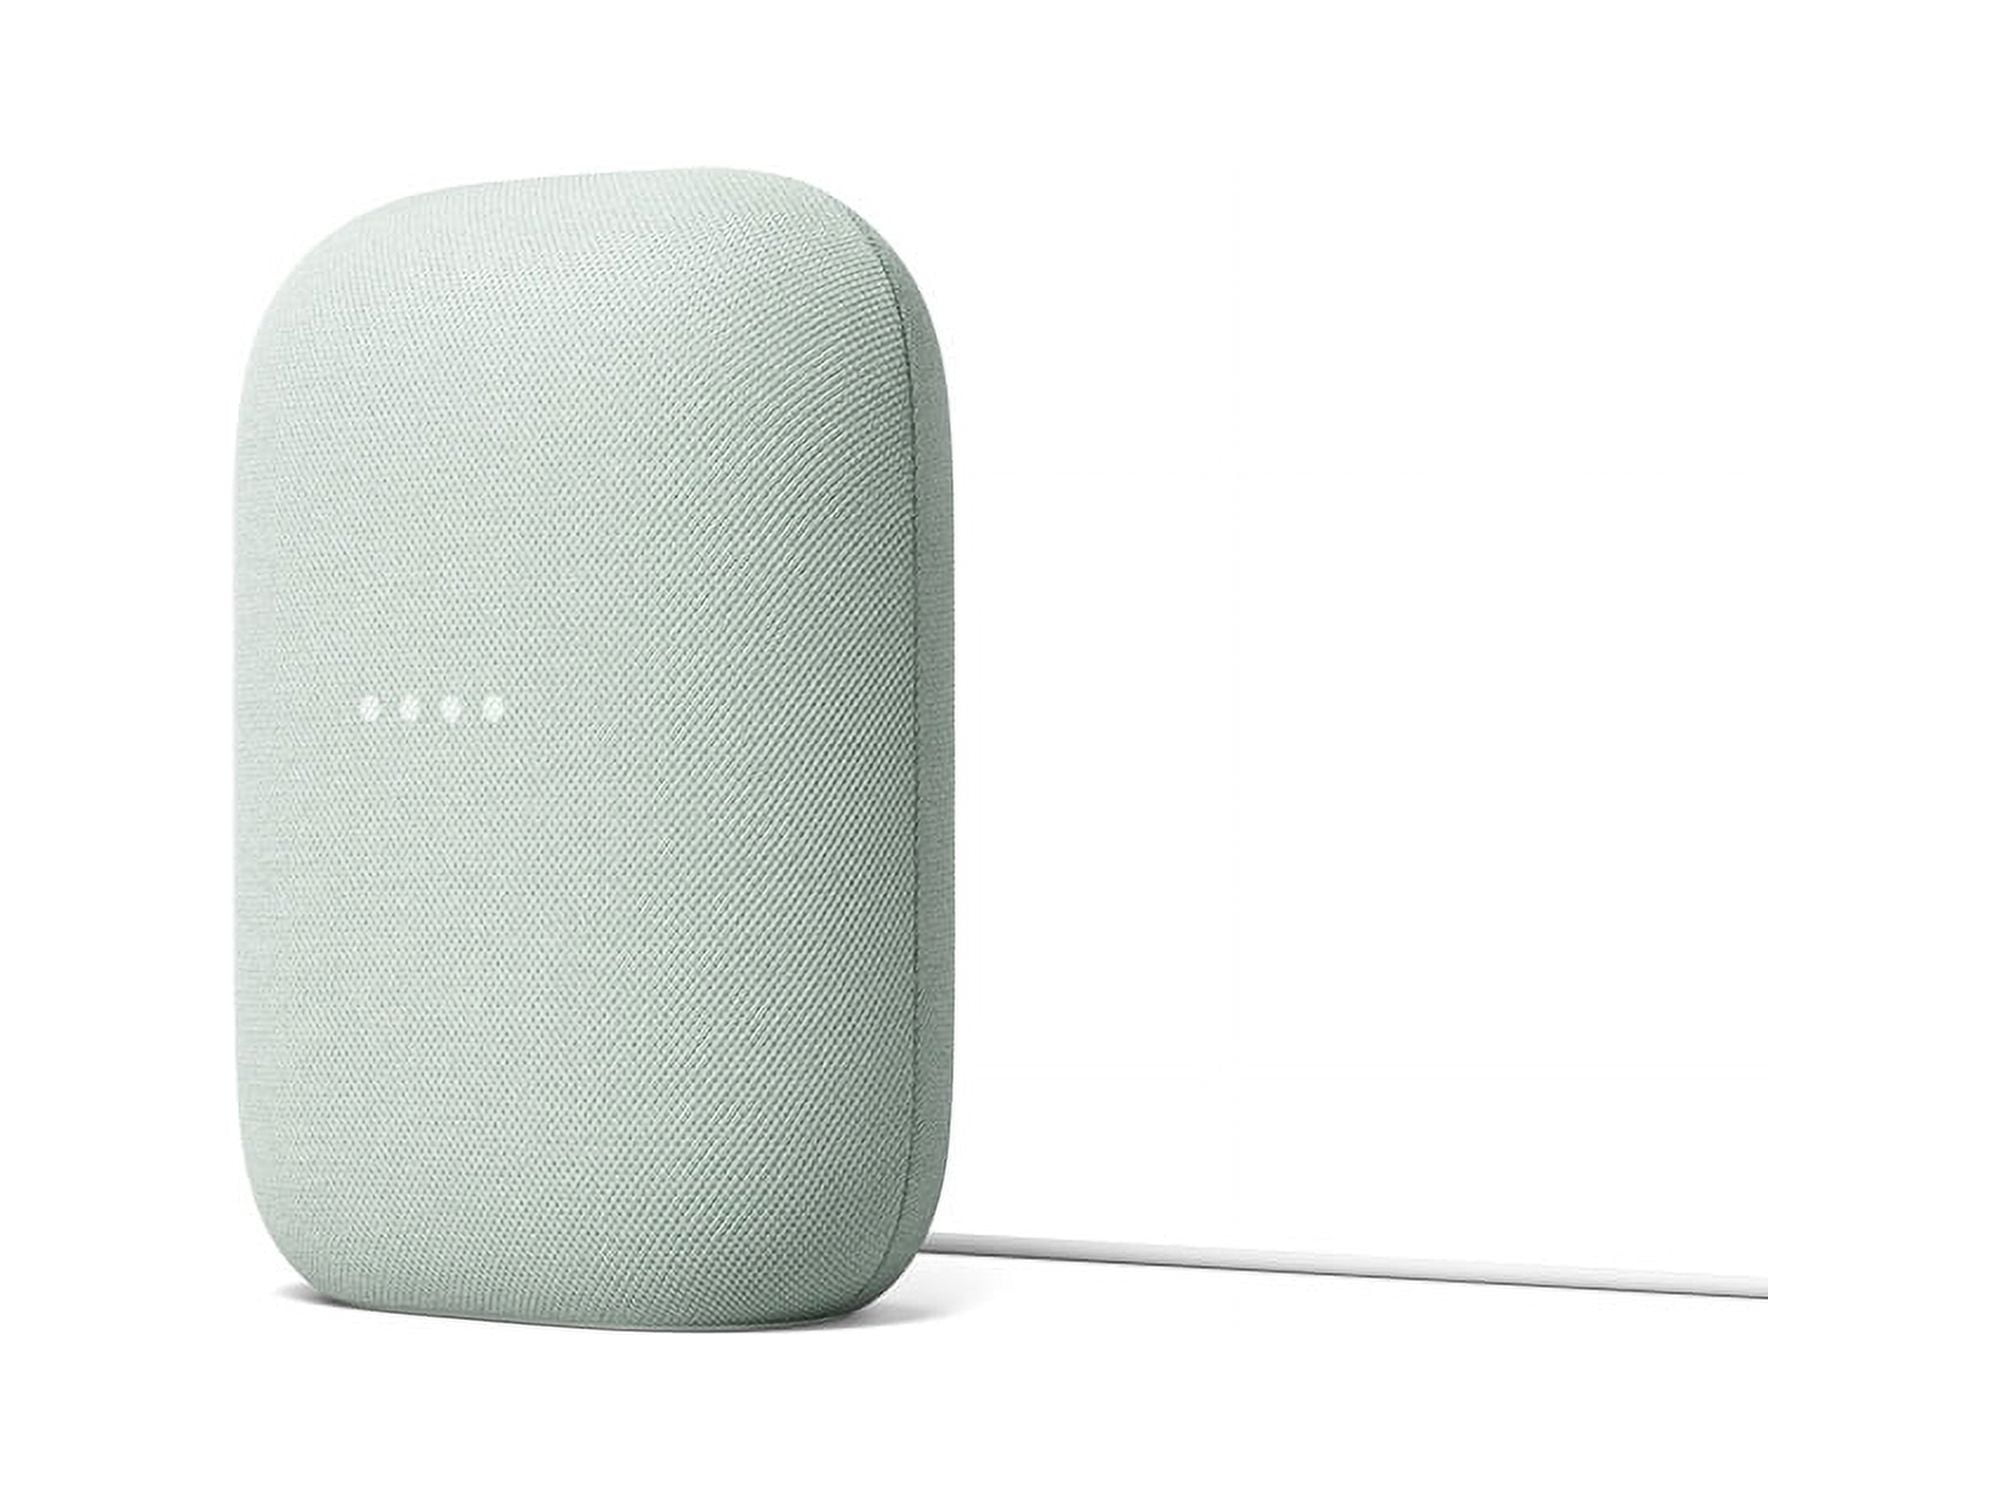 Google Nest Audio - Smart Speaker with Google Assistant - Chalk